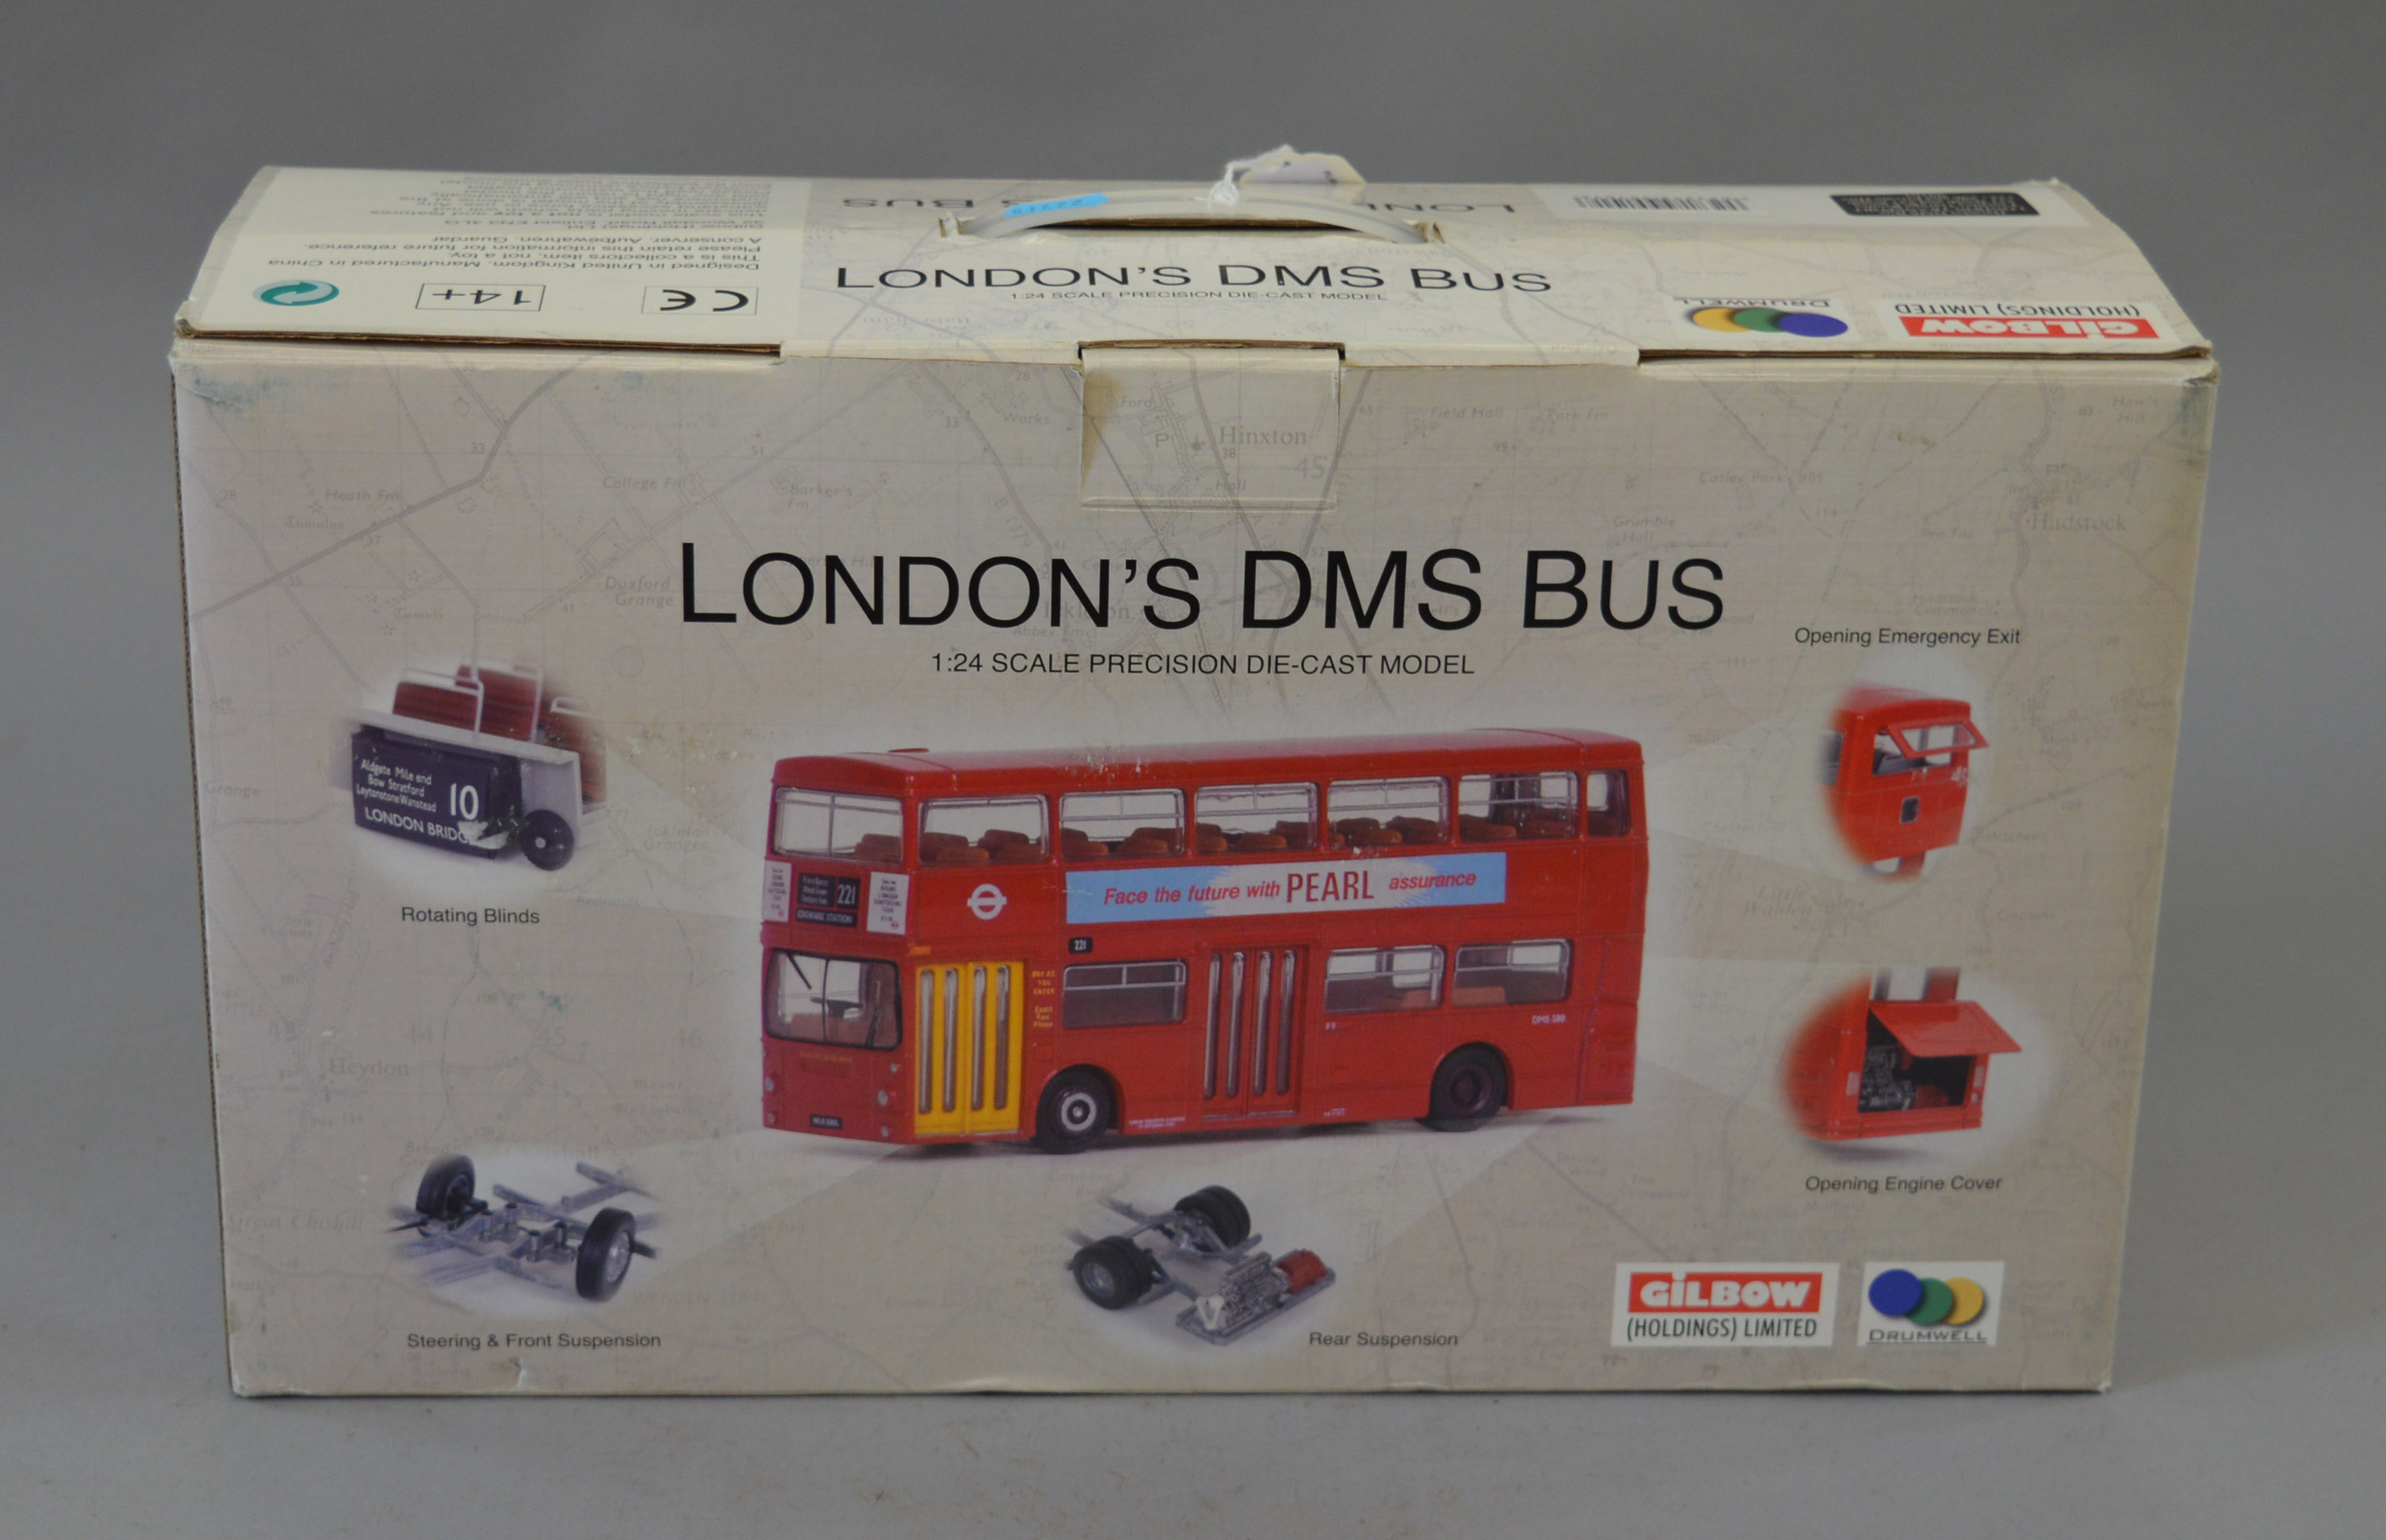 A 1:24 boxed Gilbow London DMS Bus